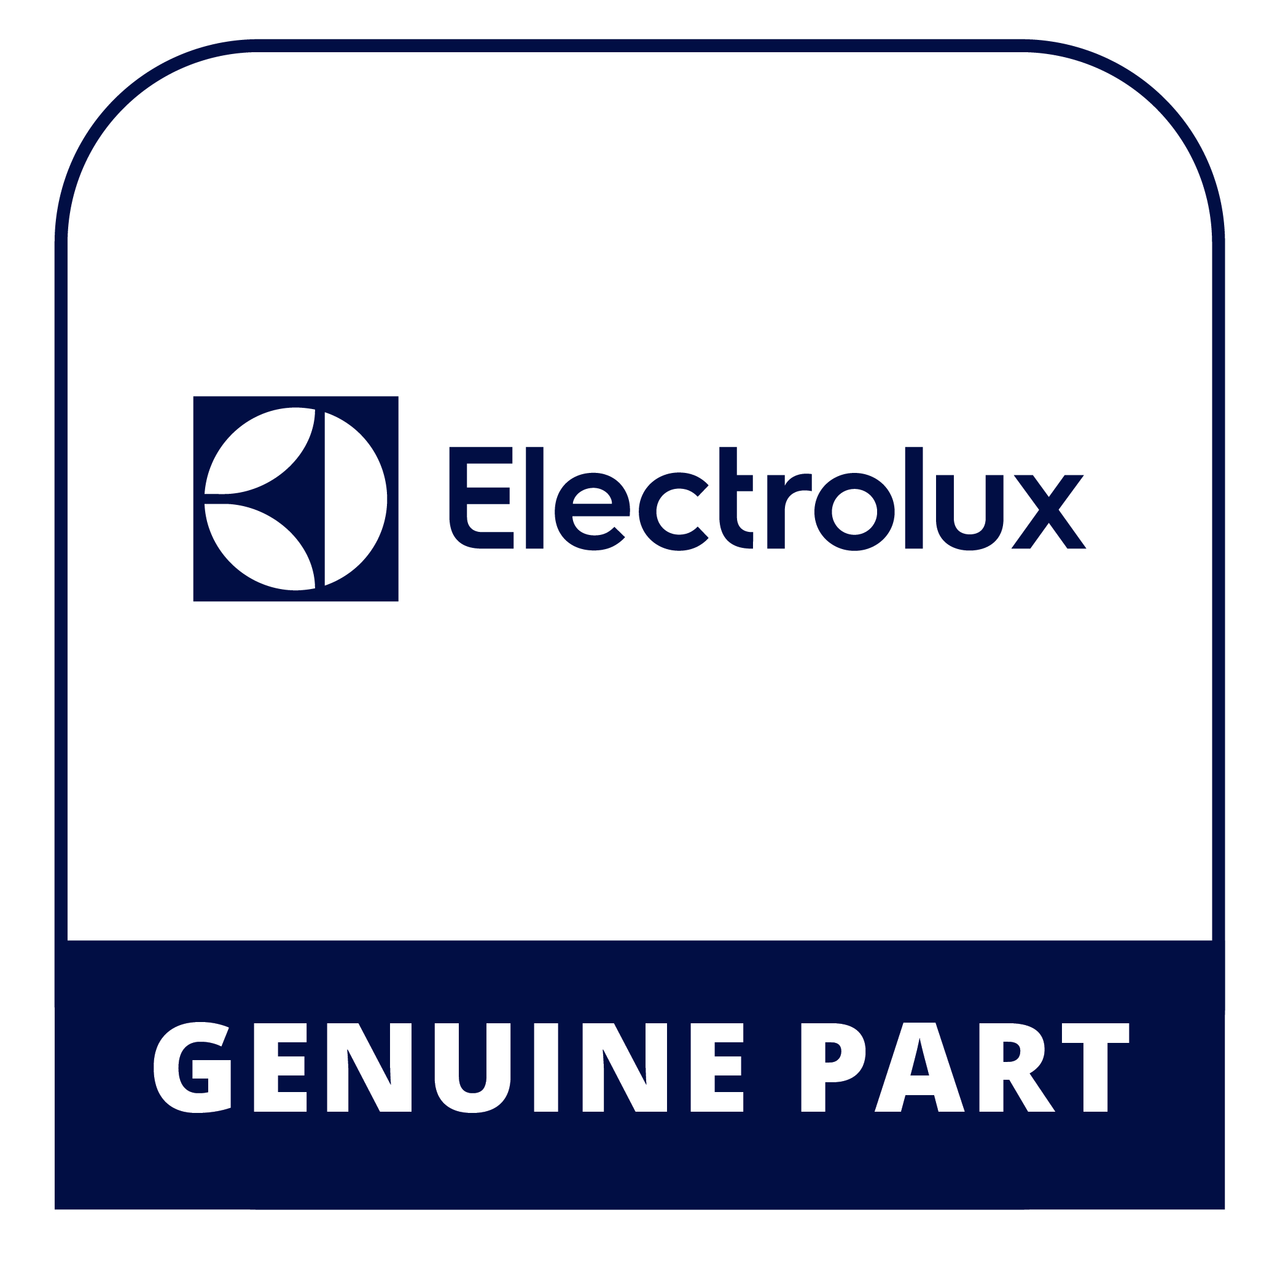 Frigidaire - Electrolux 5304502152 Connector - Genuine Electrolux Part